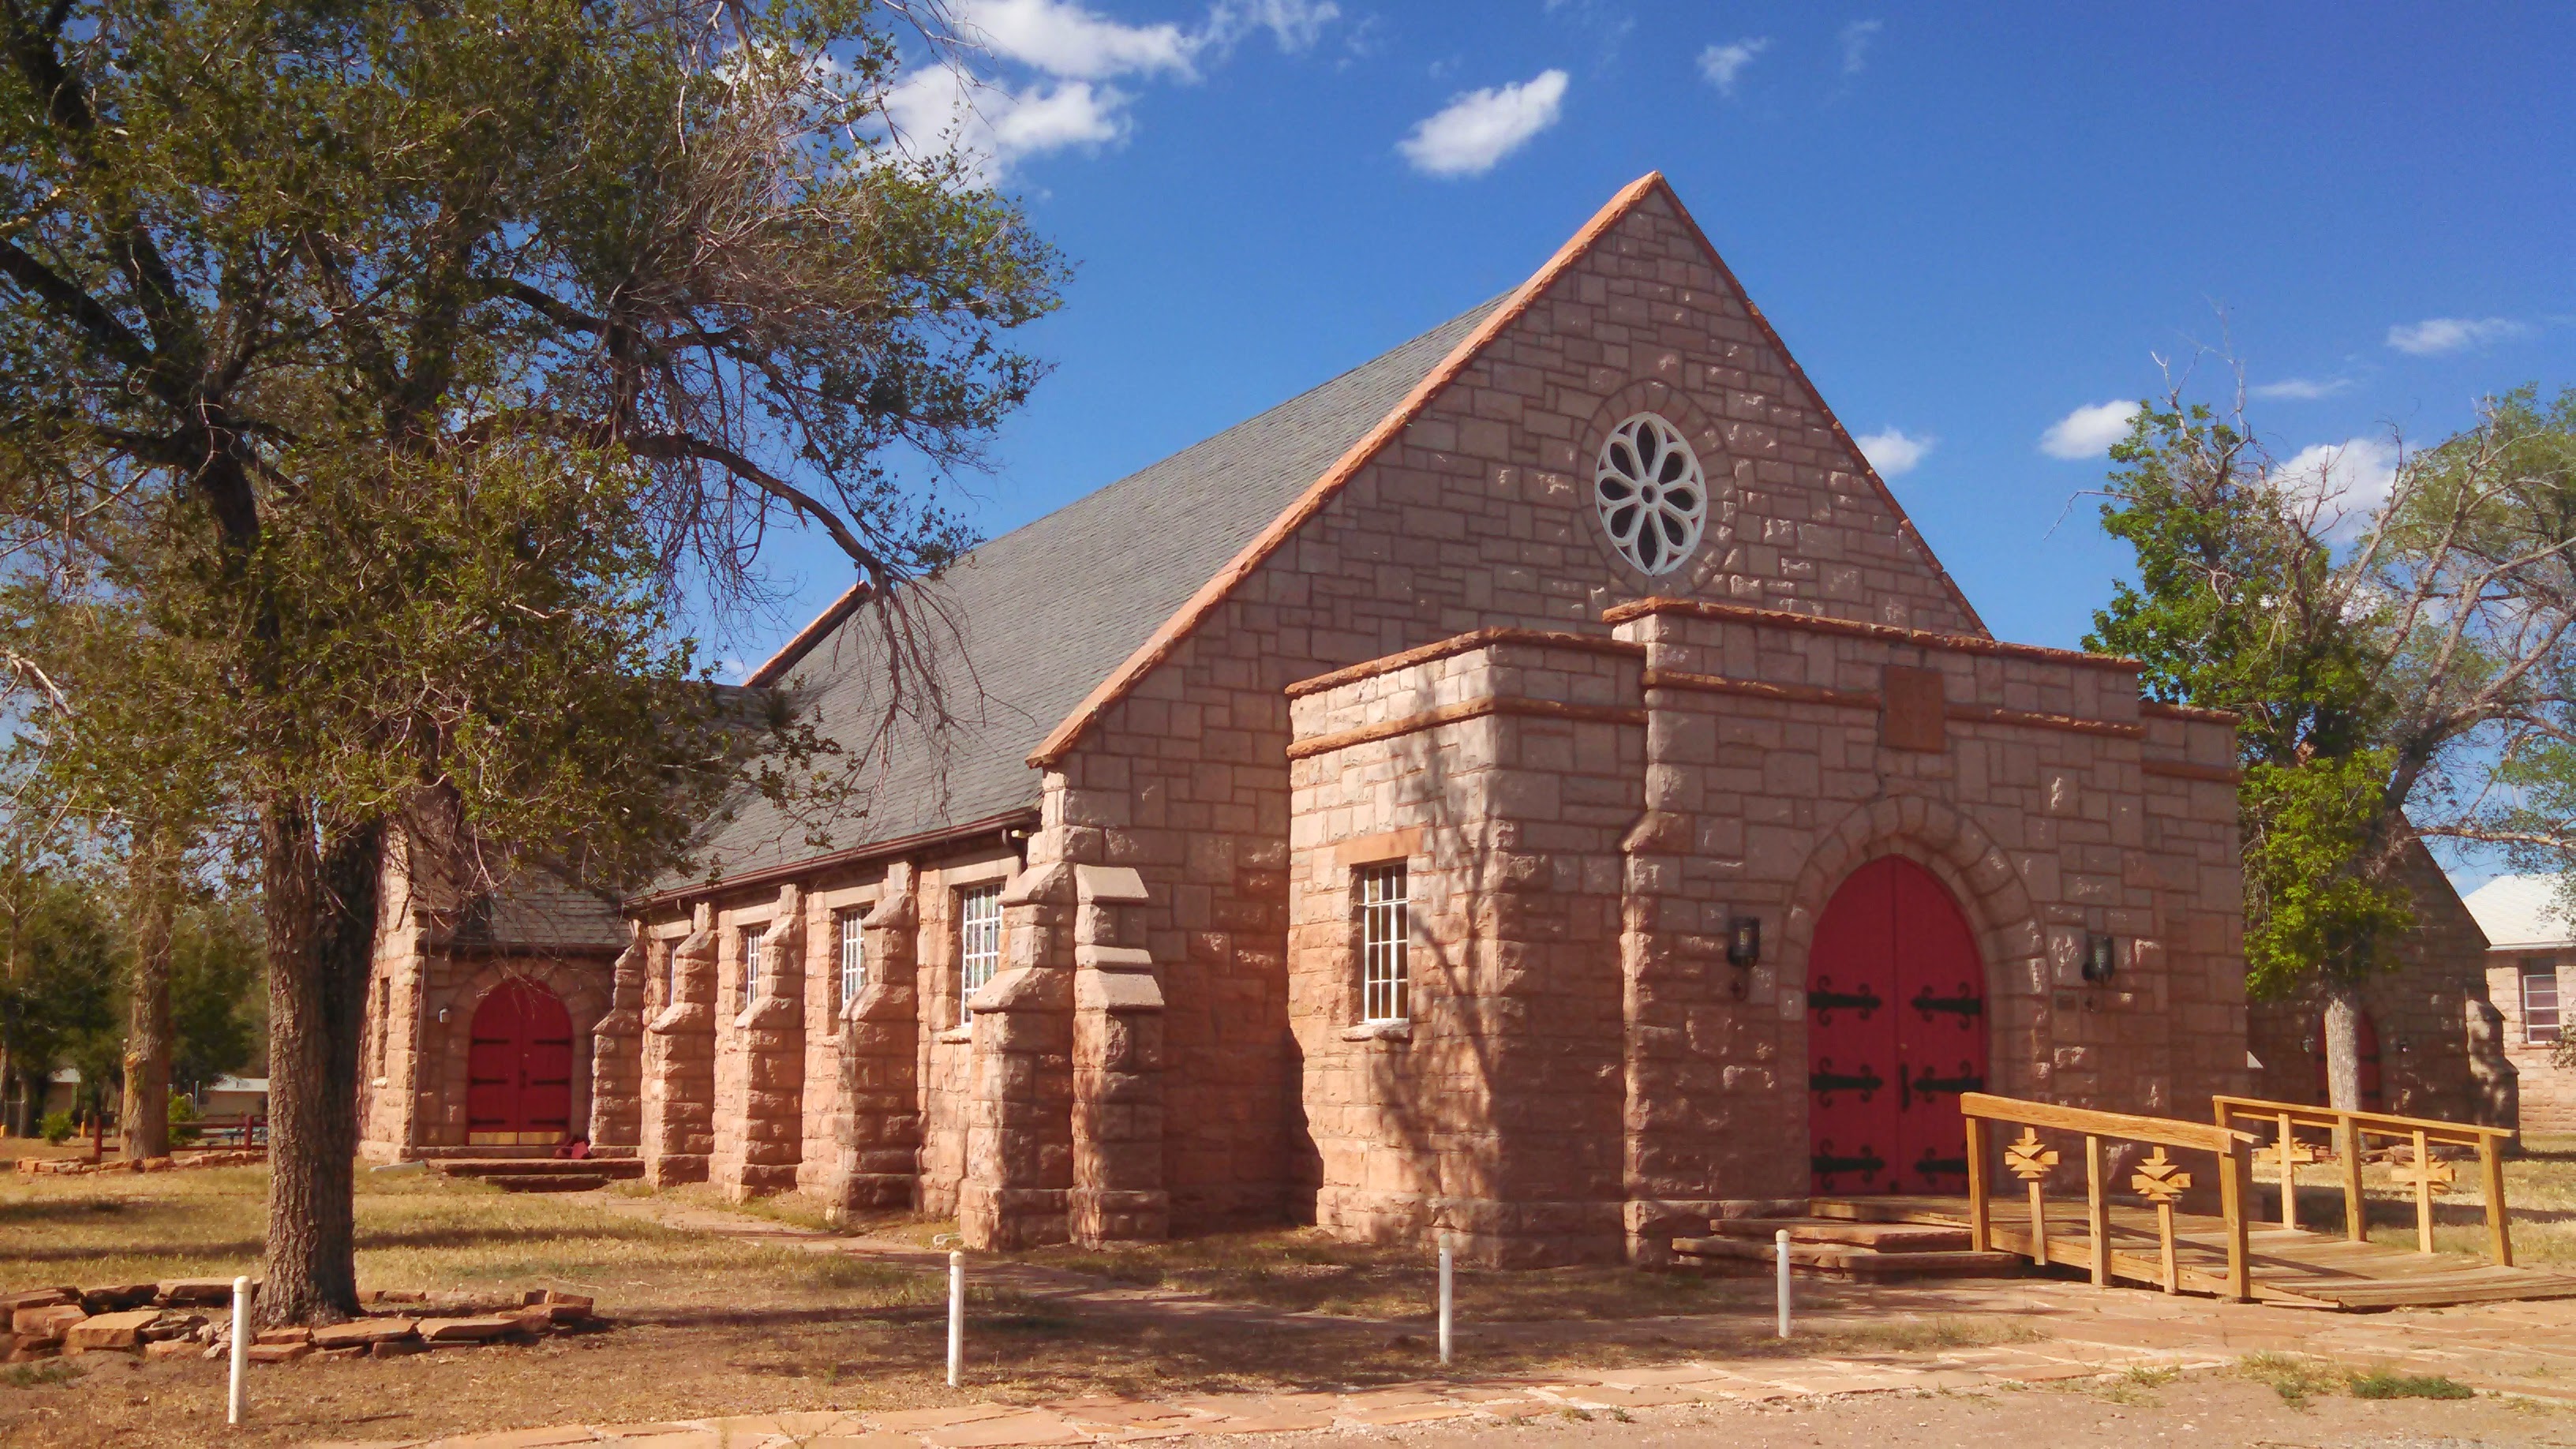 Ganado Presbyterian Church in 2014, where my grandfather, Bill Vogel, began his work as a mission pastor in 1954